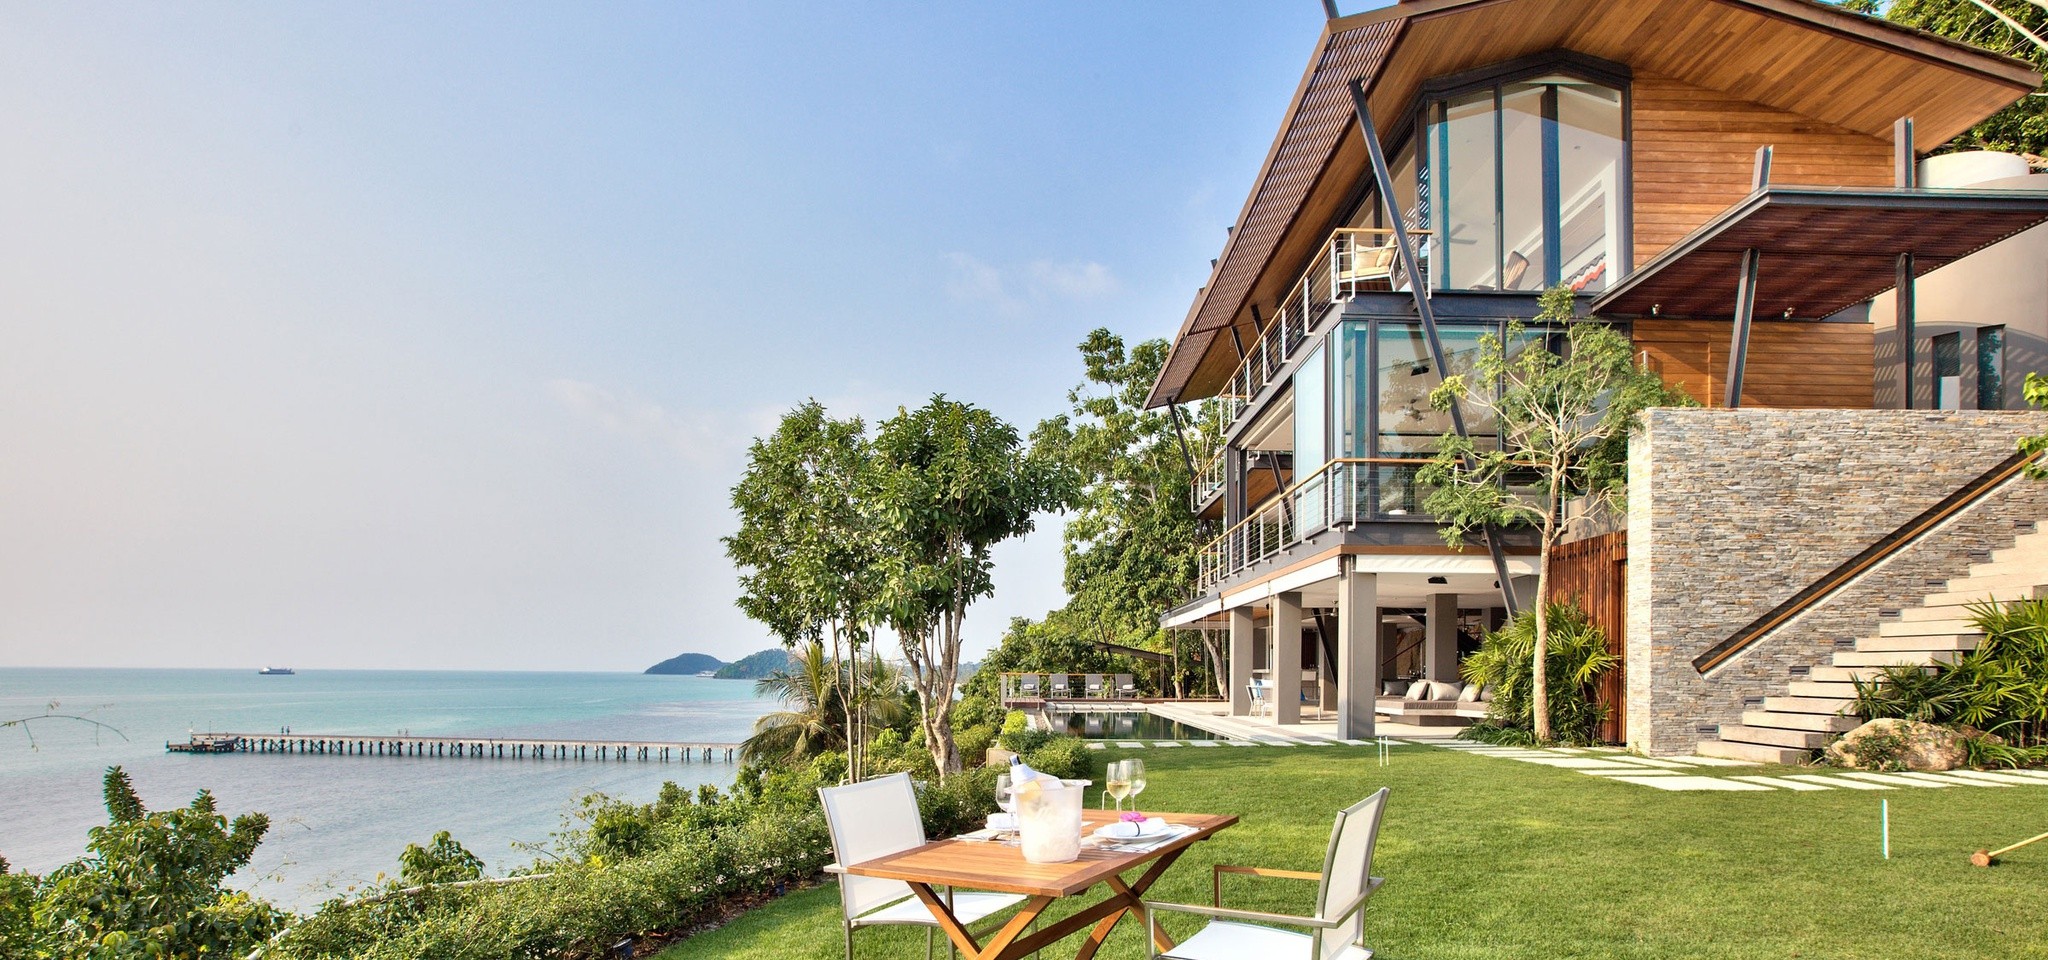 TheView Villa View – The View Samui – Samui – Thailand